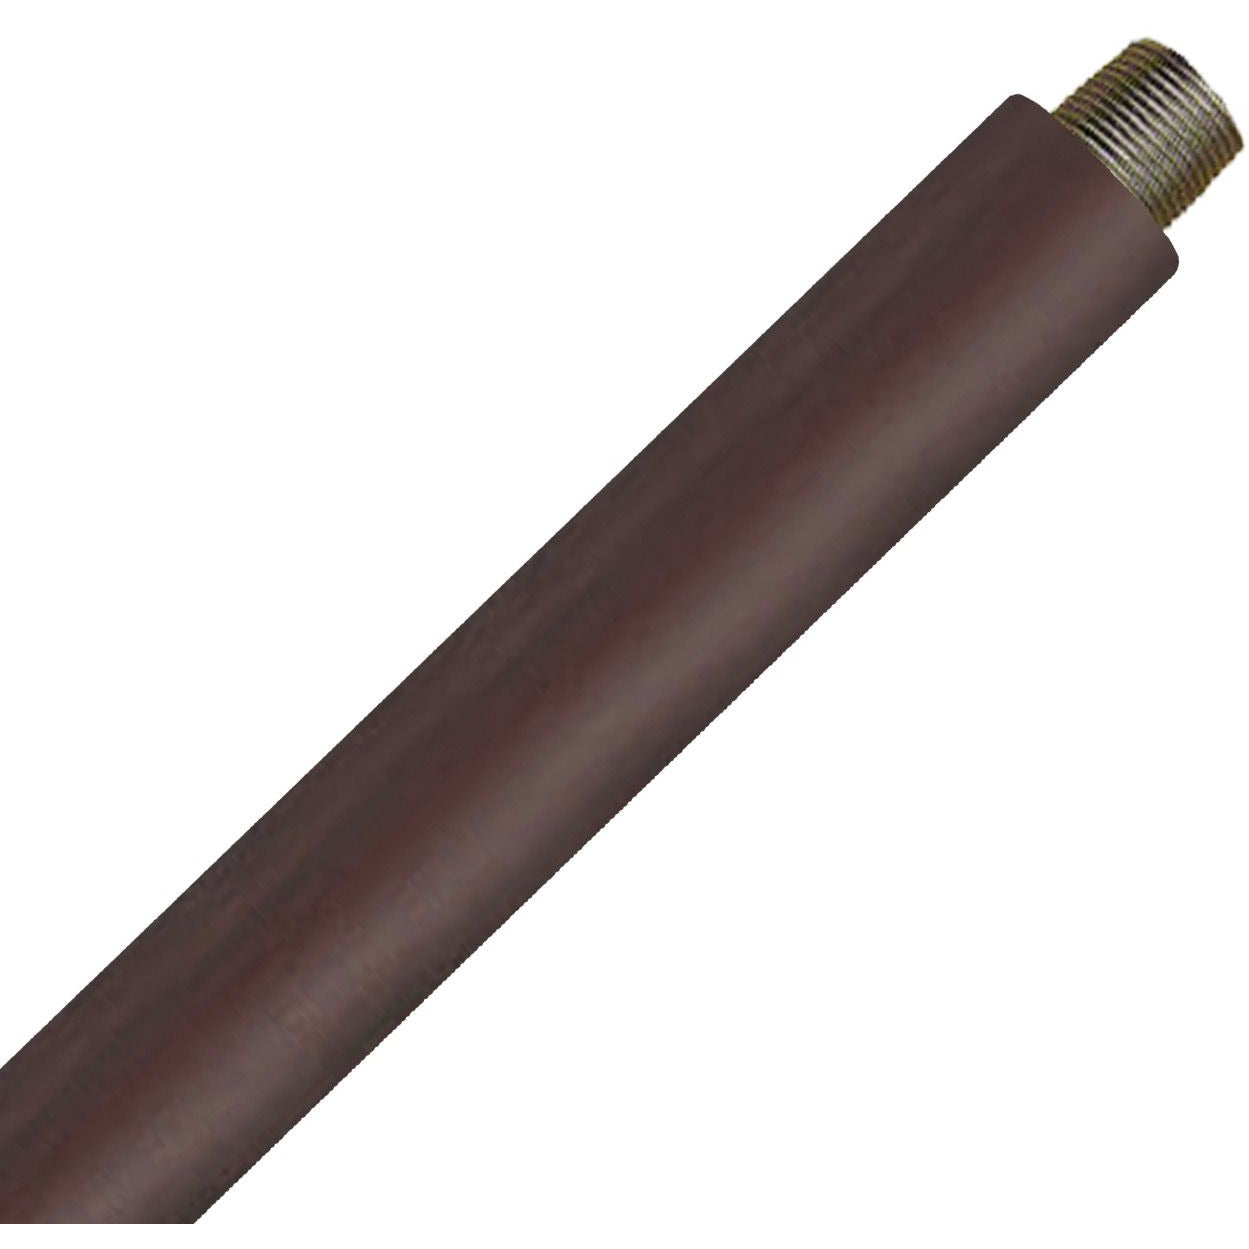 9.5" Extension Rod